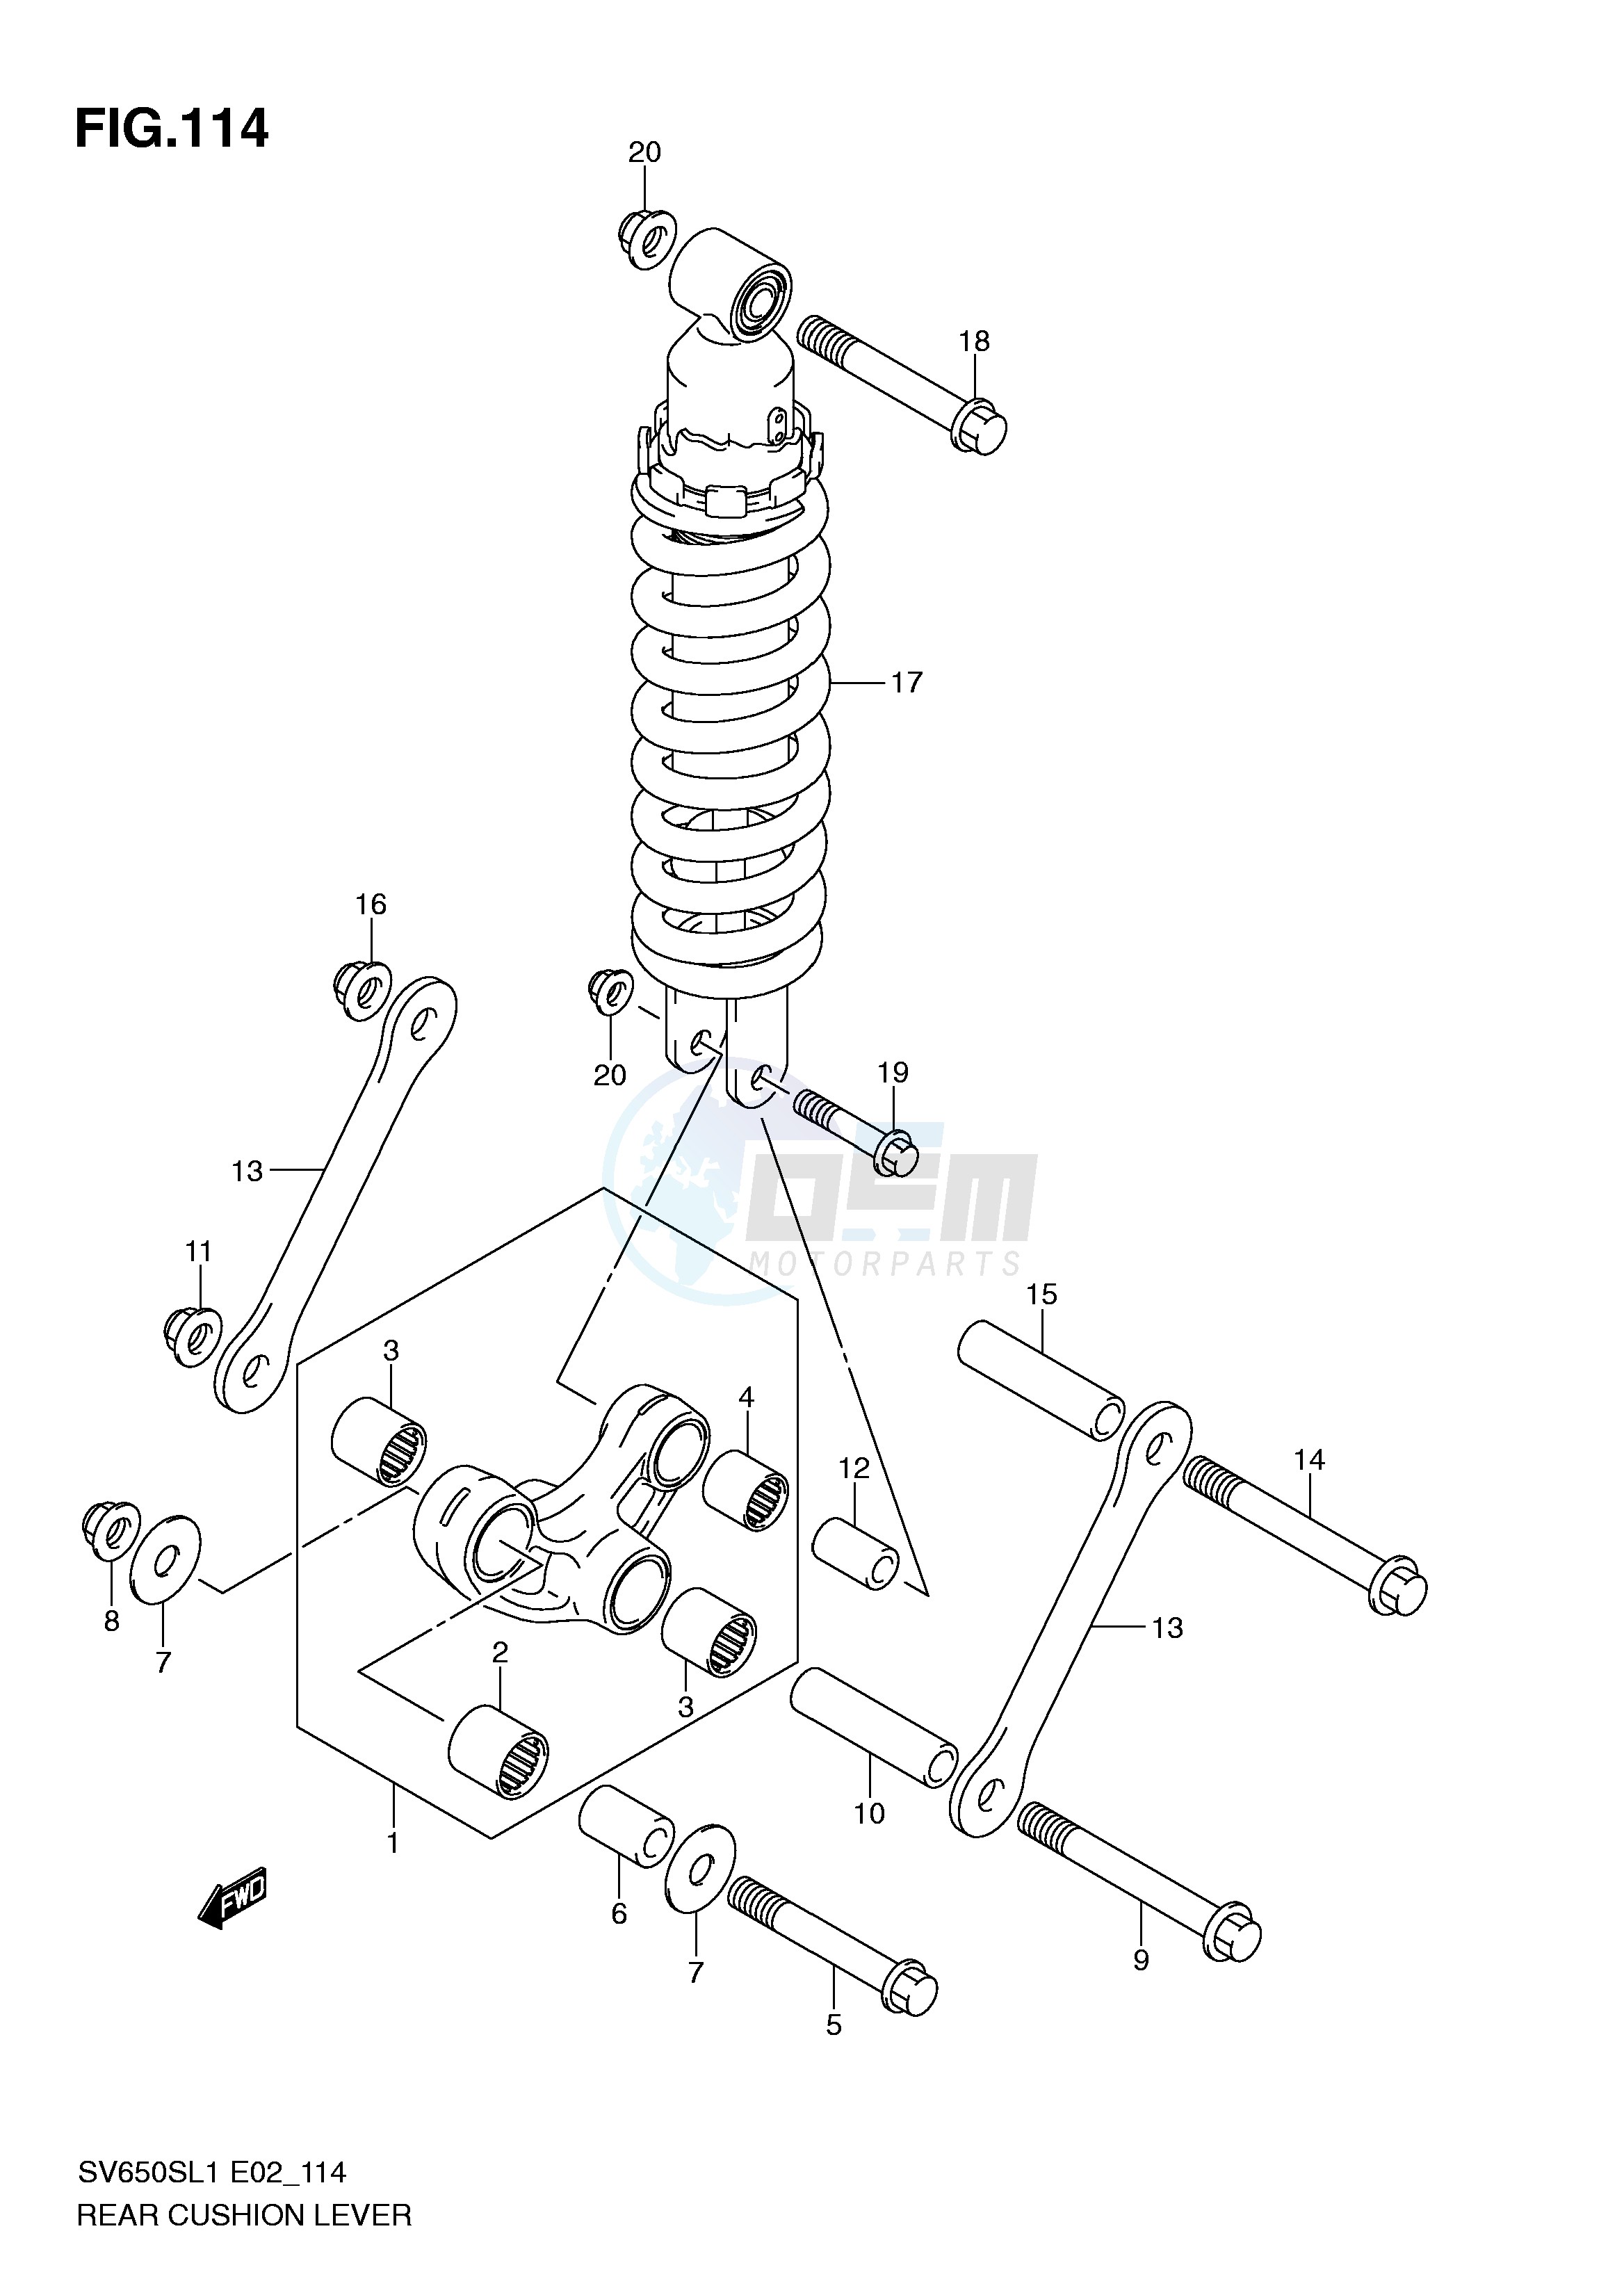 REAR CUSHION LEVER (SV650SL1 E2) blueprint